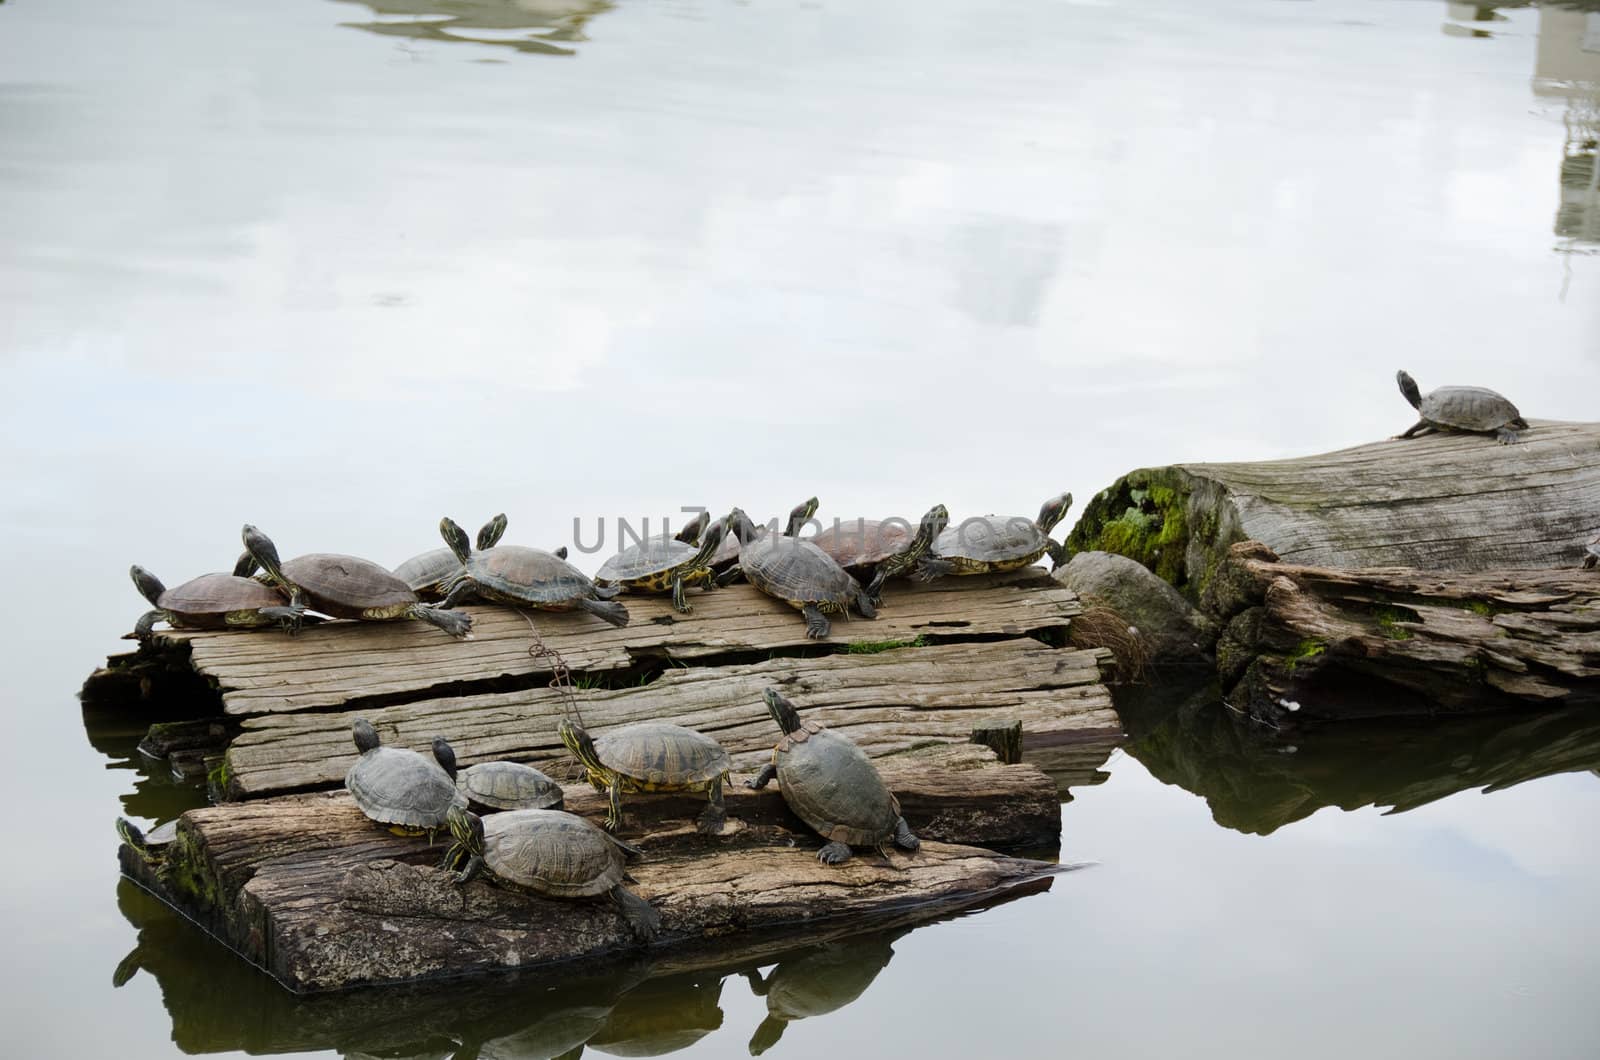 Turtles sunbathing on wood by Arrxxx